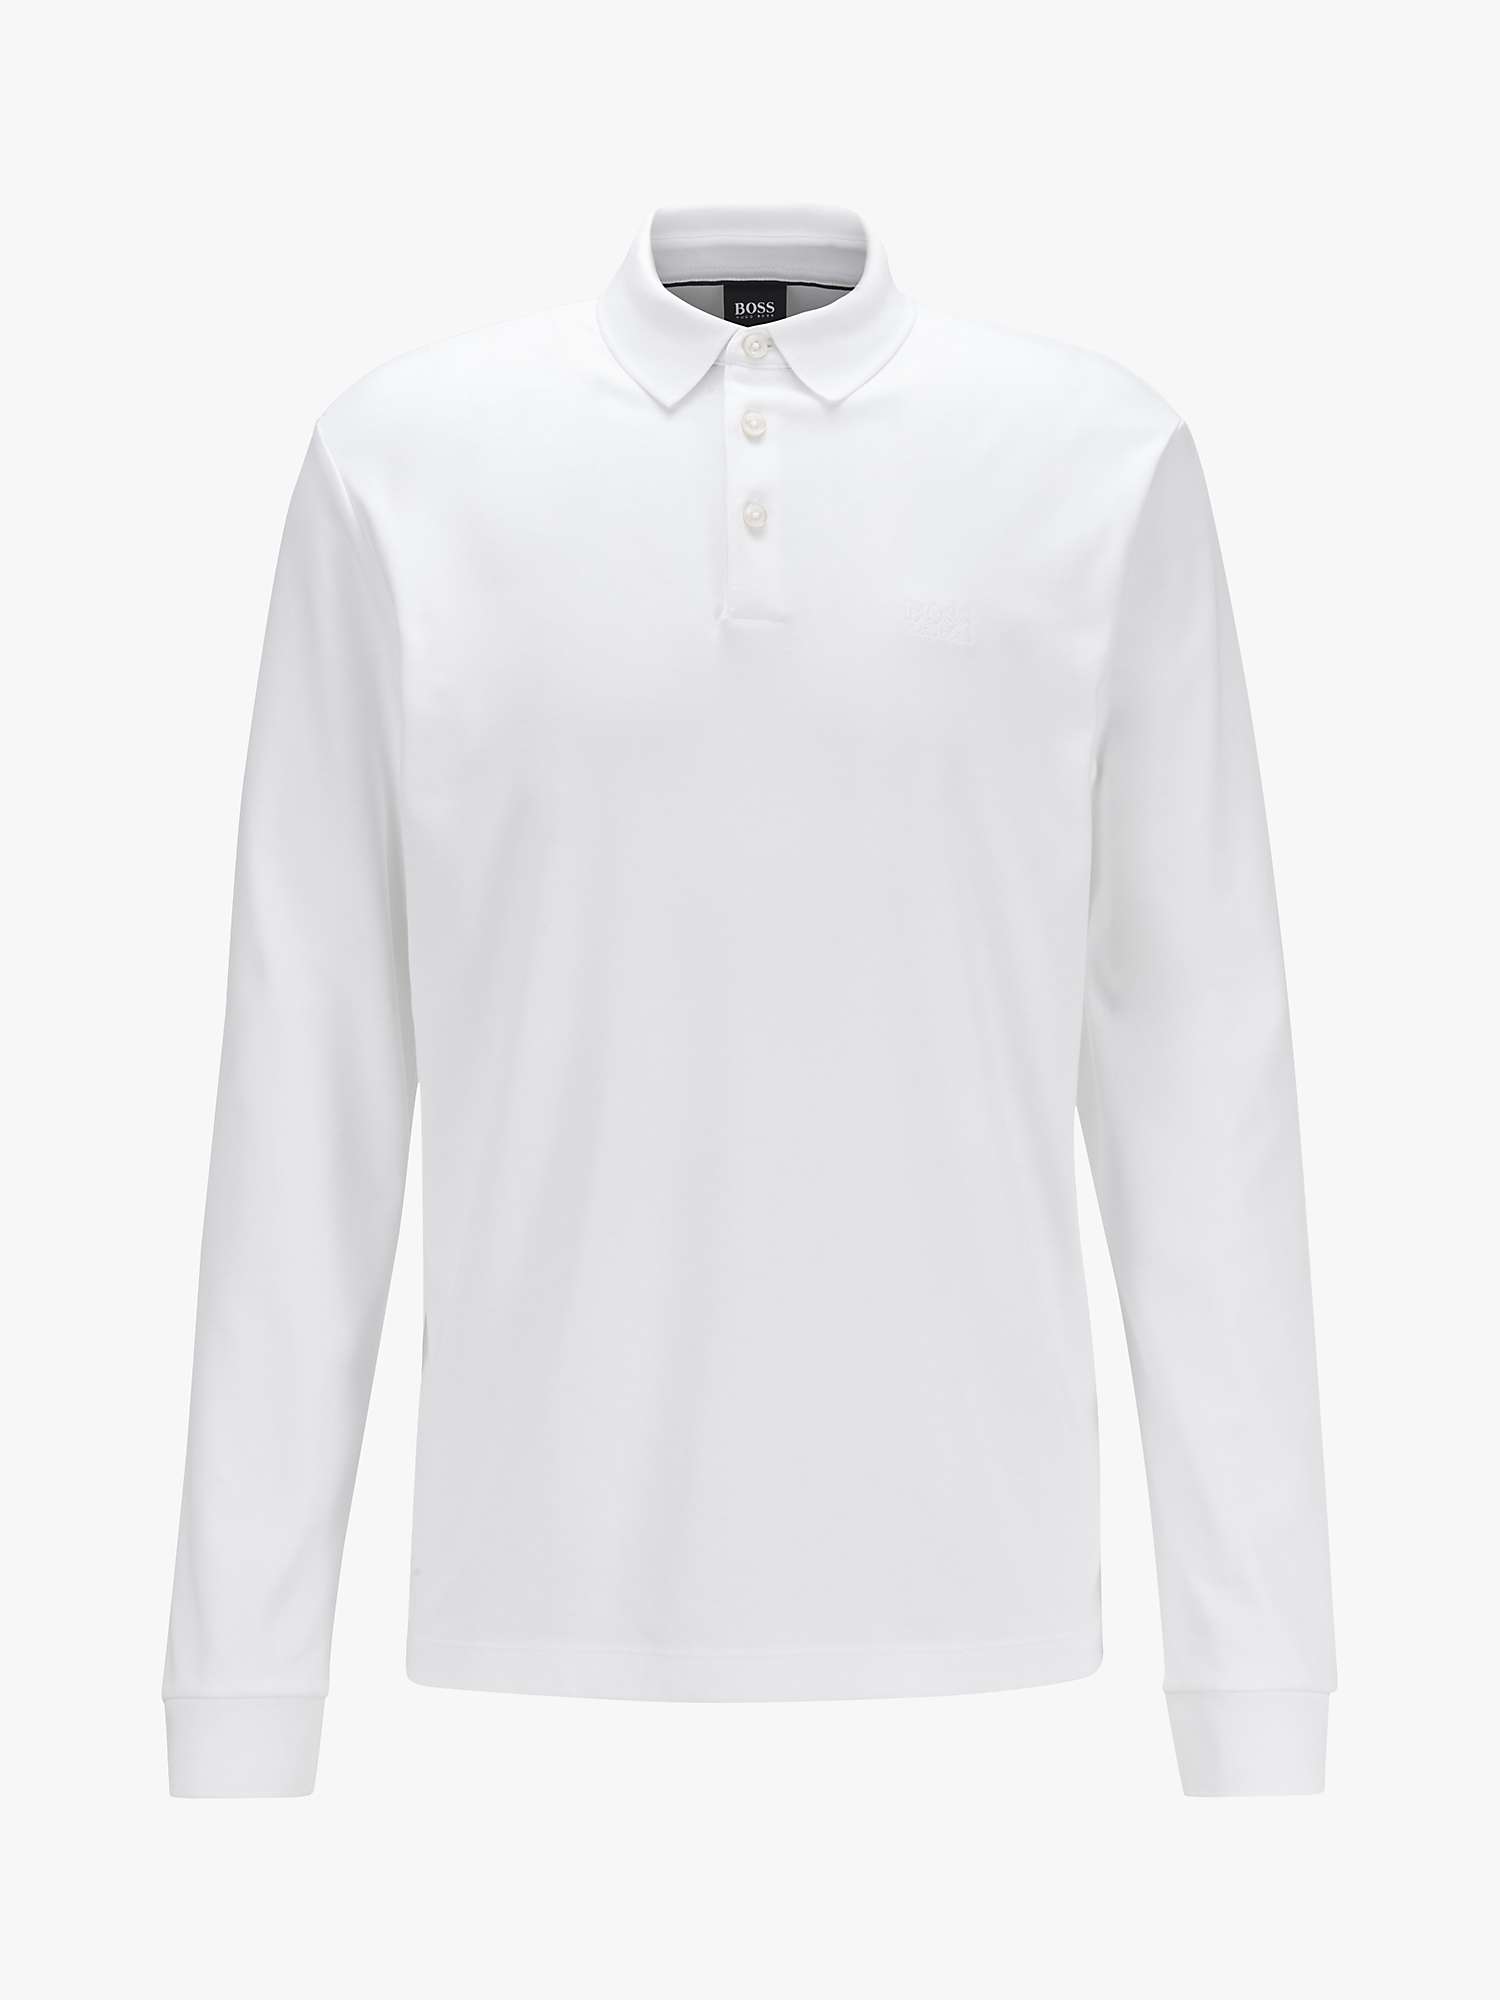 Buy BOSS Pado Long Sleeve Polo Shirt Online at johnlewis.com